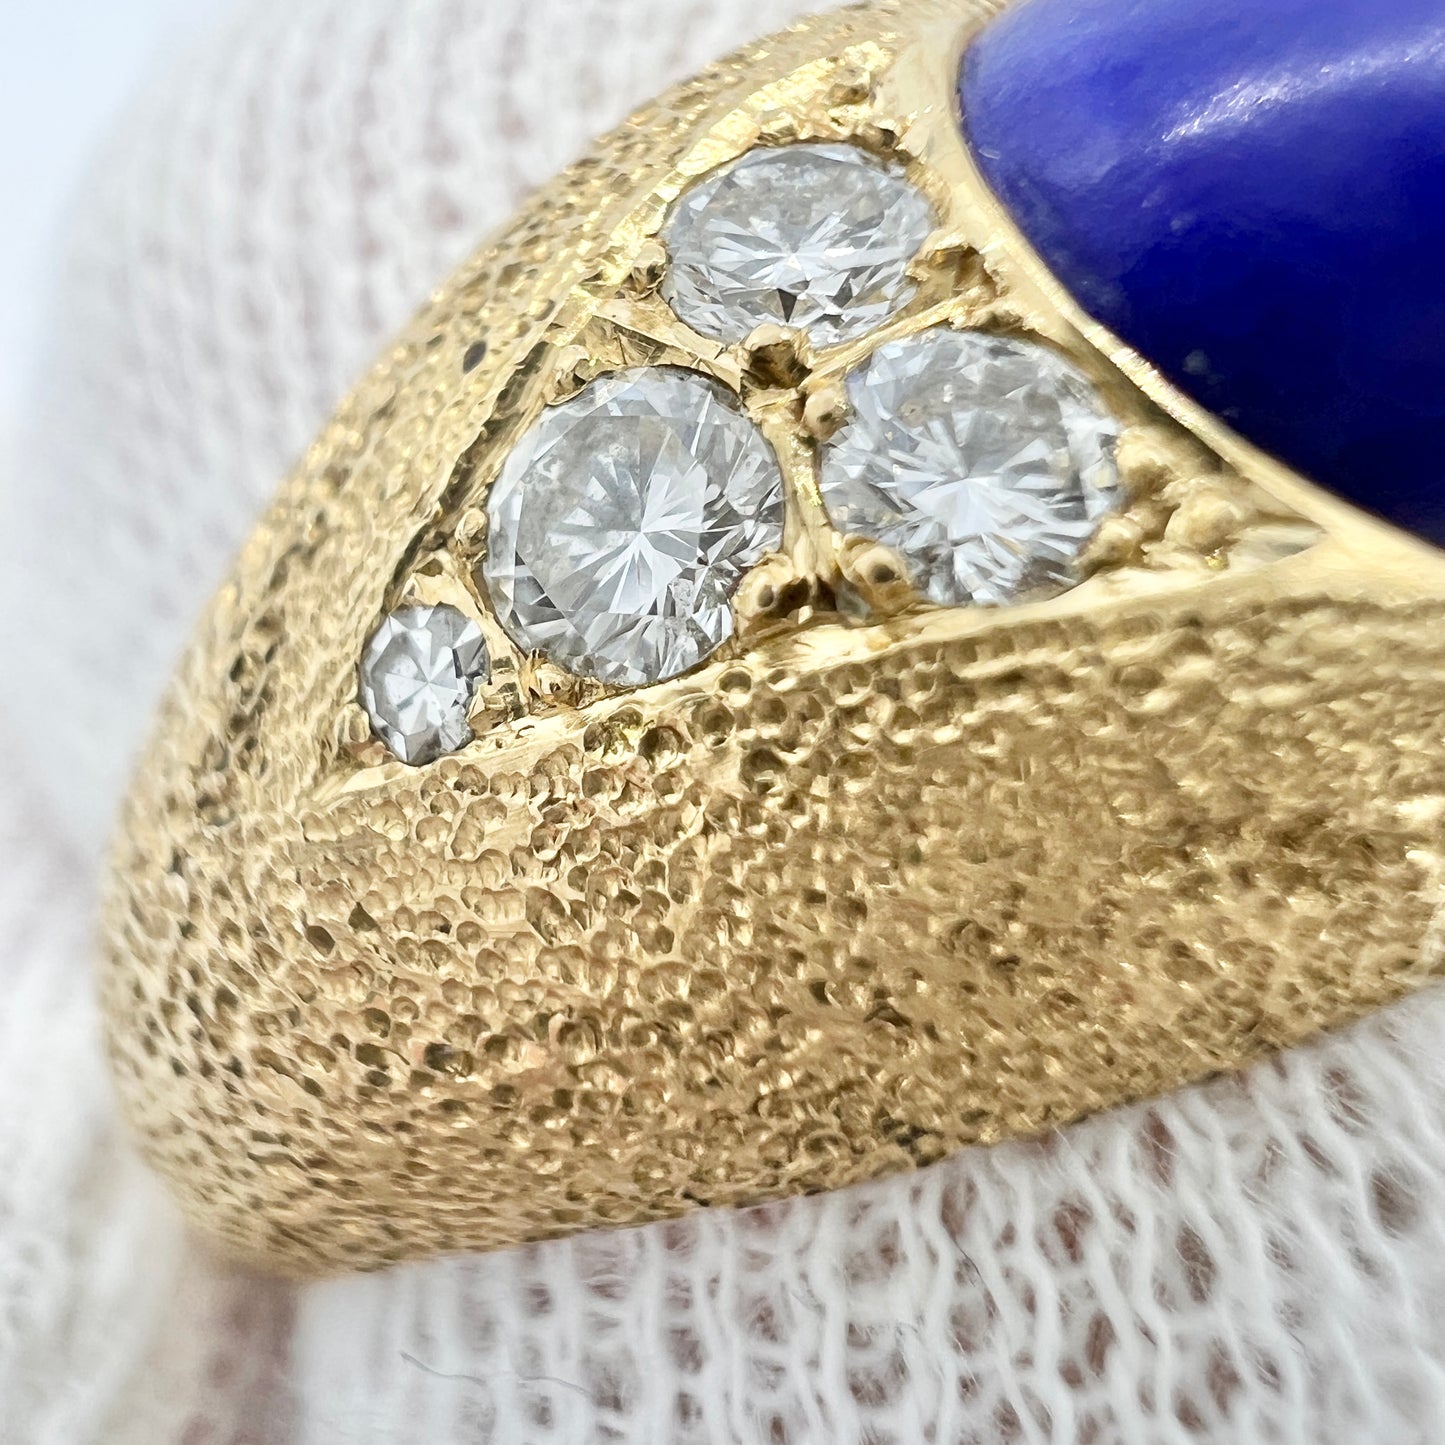 Vintage 1960-70s Bold Vintage 15.8gram. Diamond Lapis Lazuli Dome Cocktail Ring.